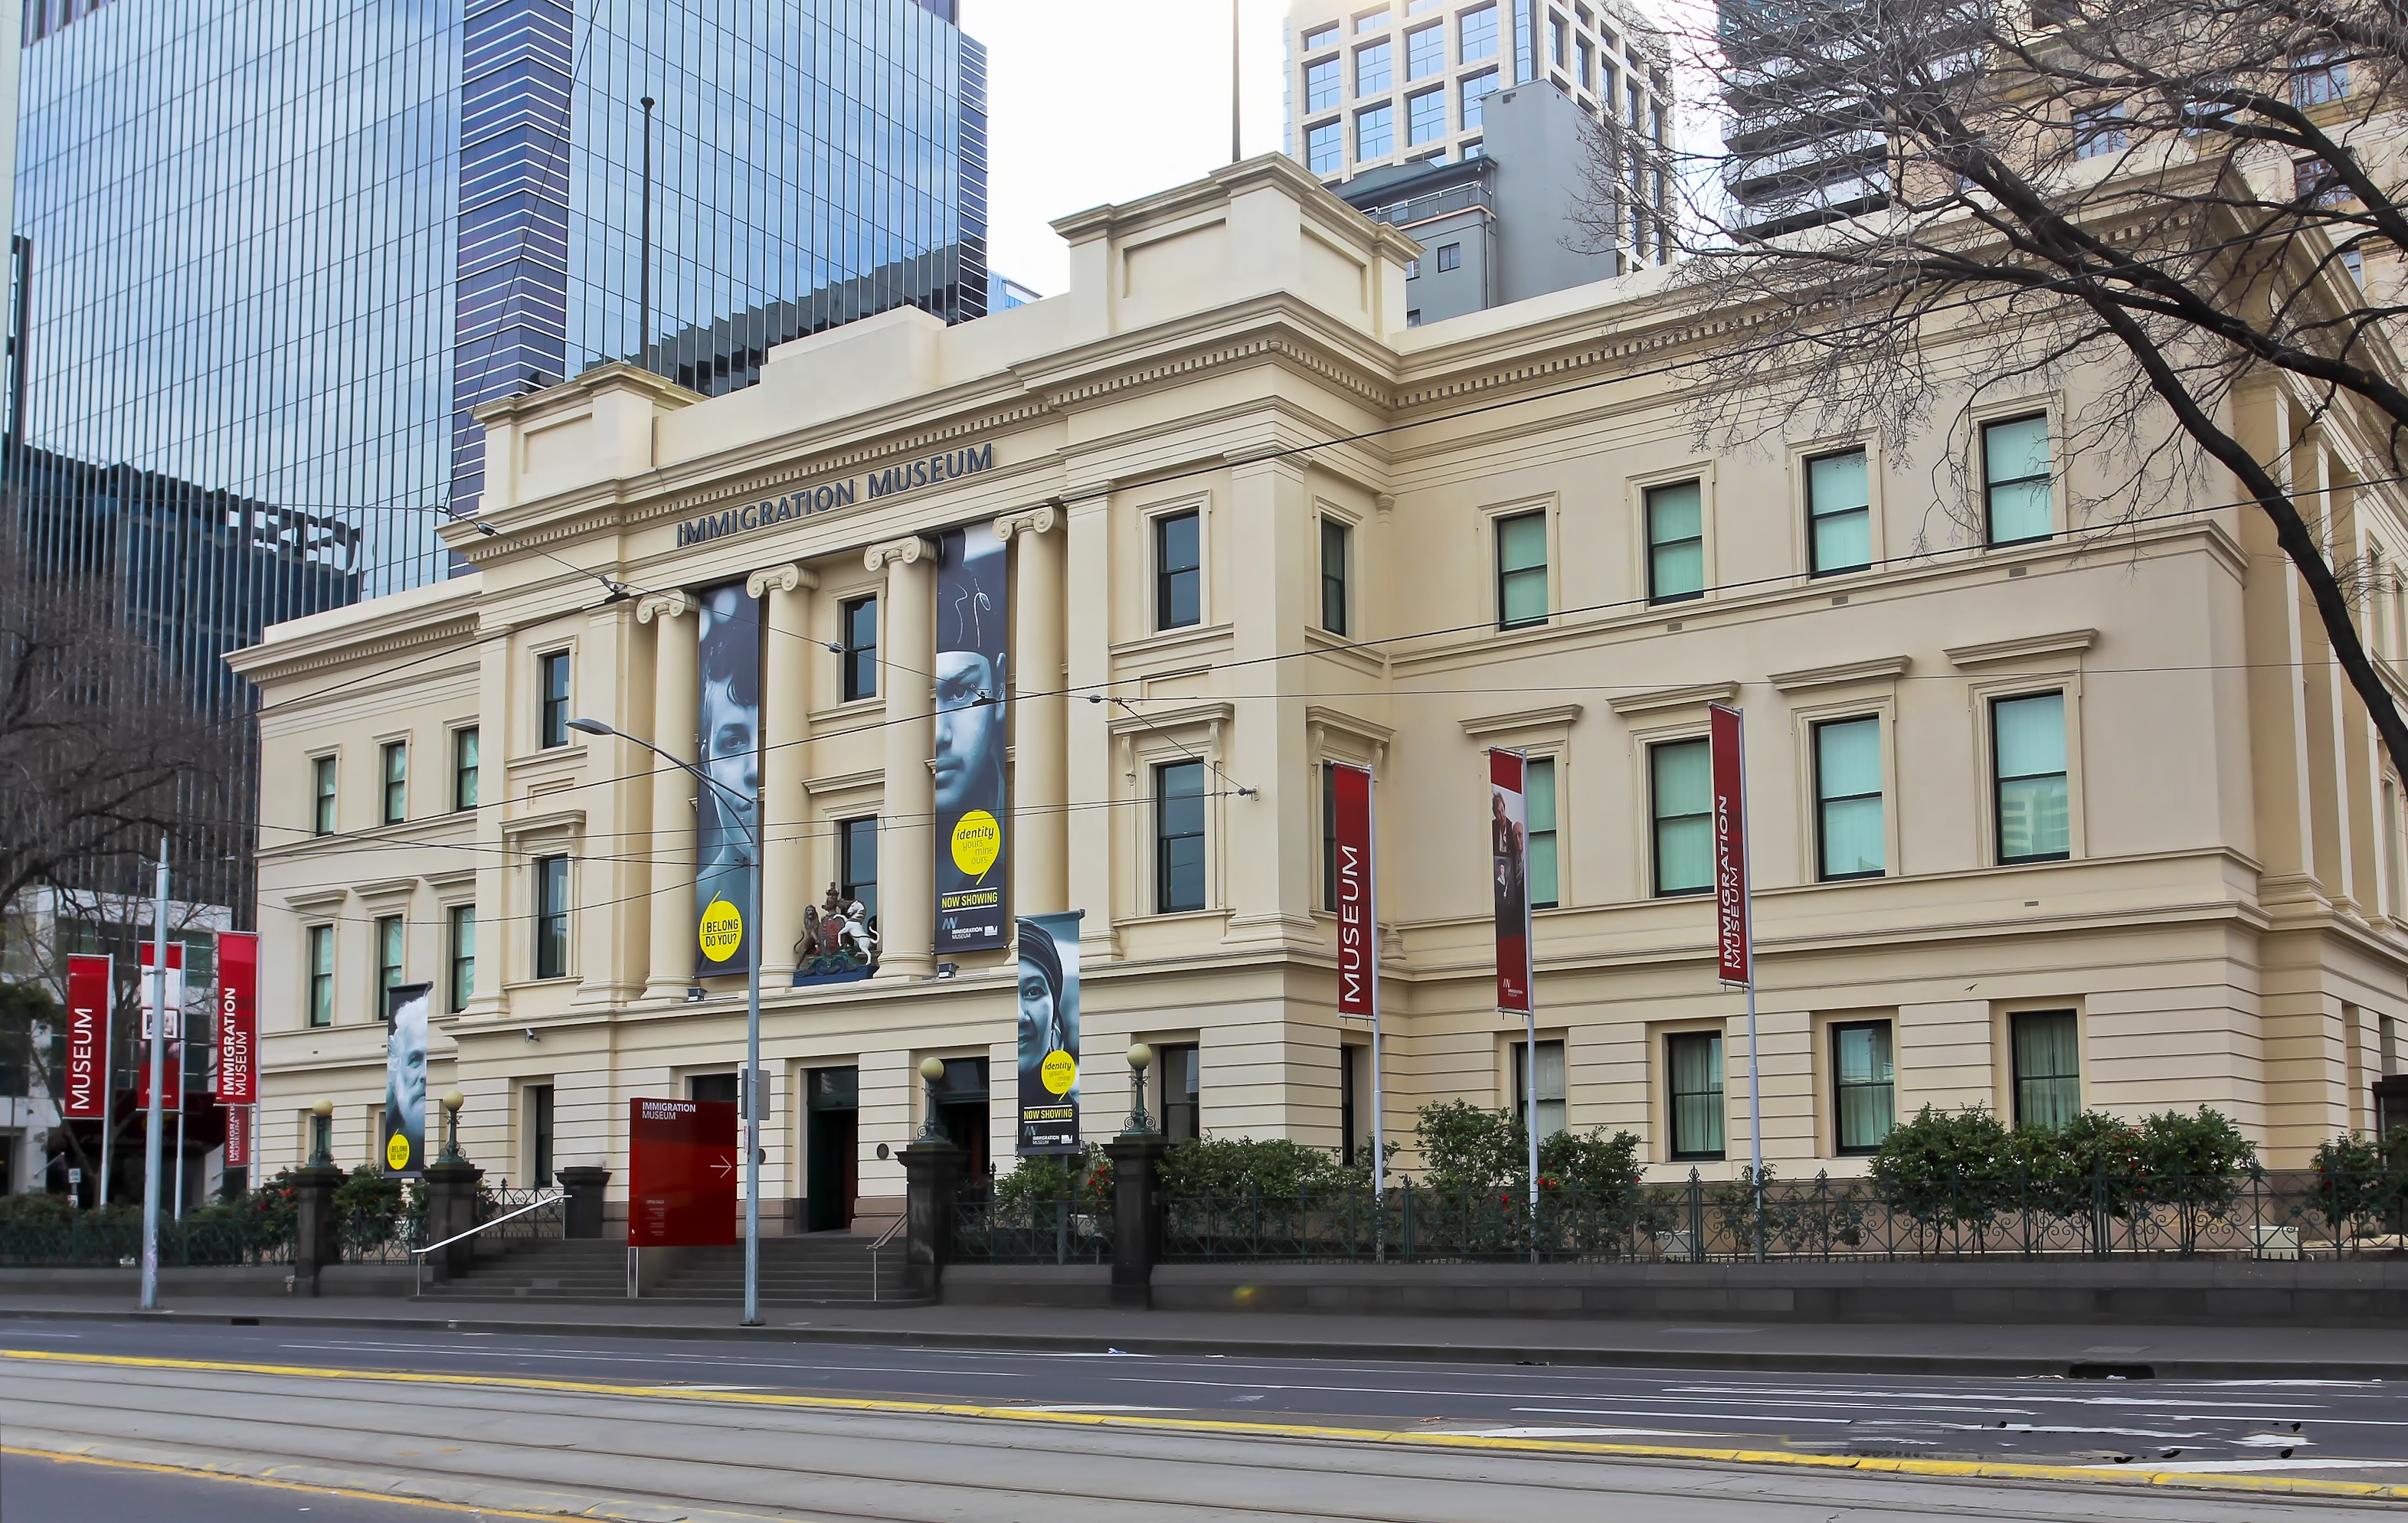 Melbourne Immigration Museum